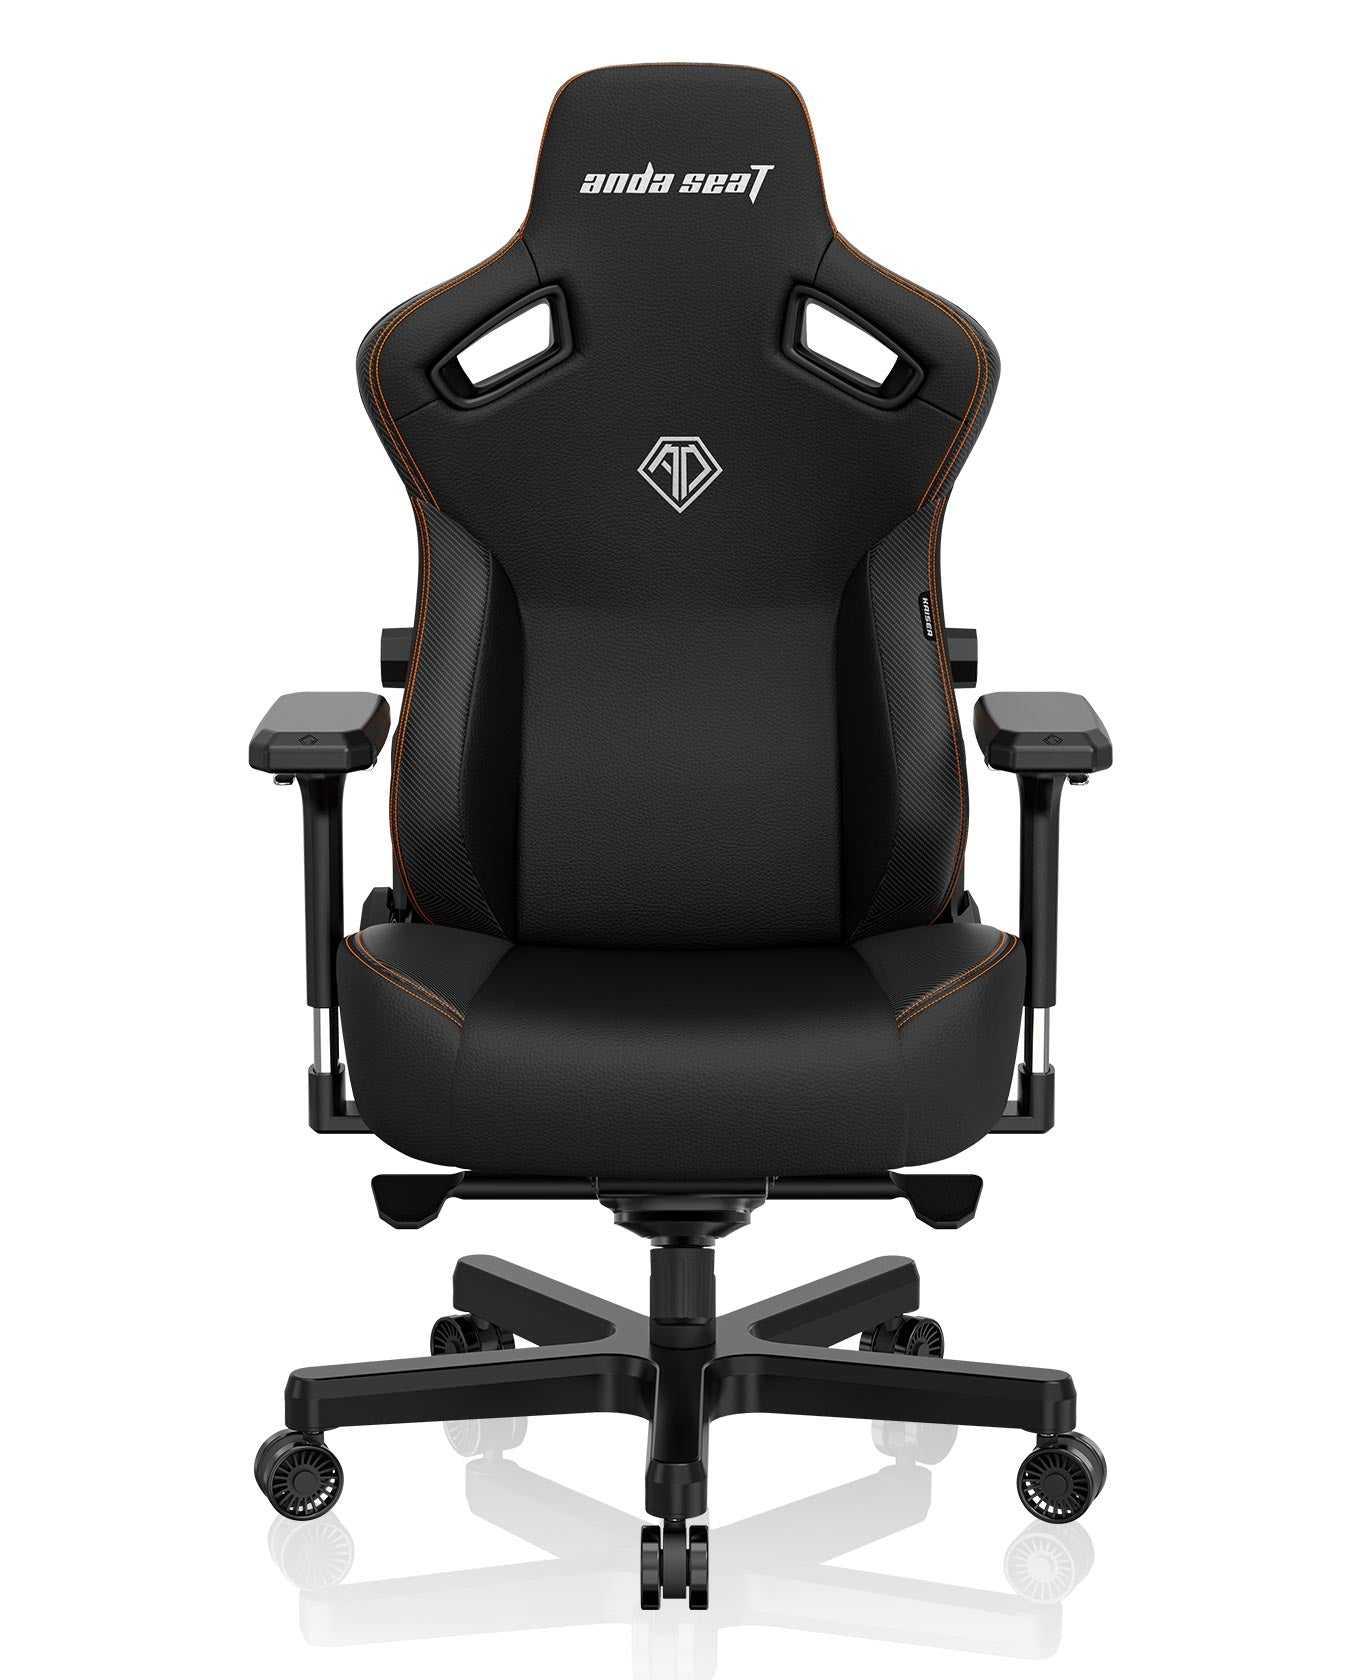 AndaSeat Kaiser 3 Series Premium Gaming Chair XL - Elegant Black Premium PVC Leather